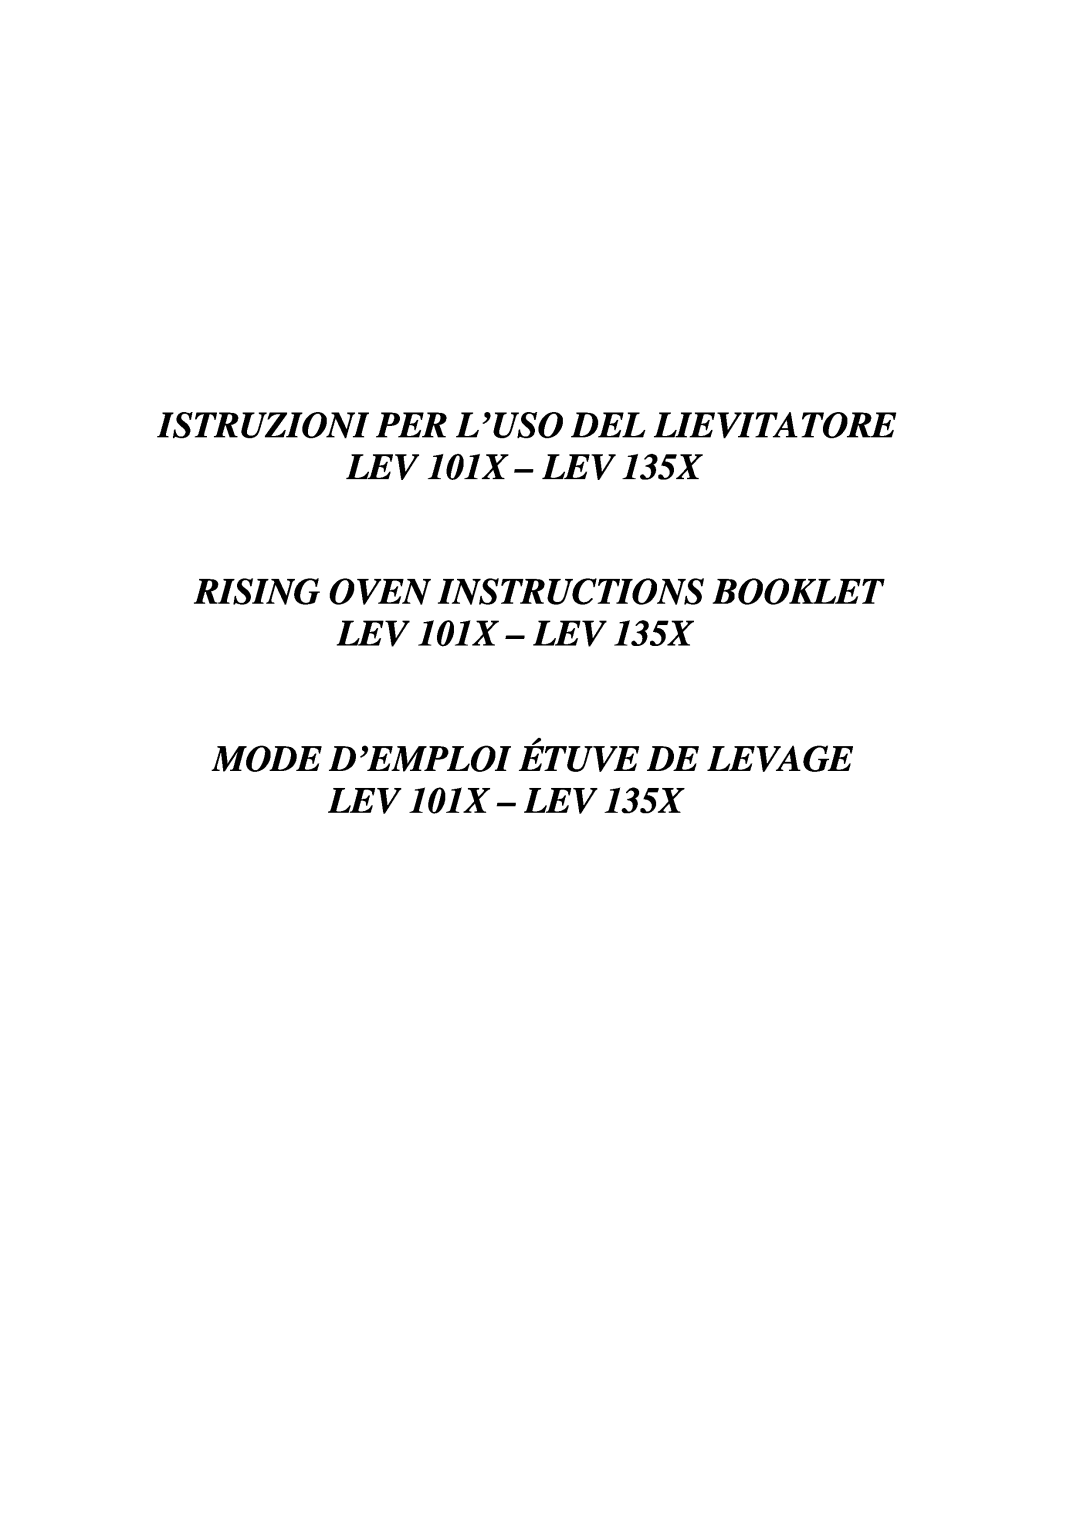 Smeg LEV 135X manual Istruzioni Per L’Uso Del Lievitatore, RISING OVEN INSTRUCTIONS BOOKLET LEV 101X - LEV 